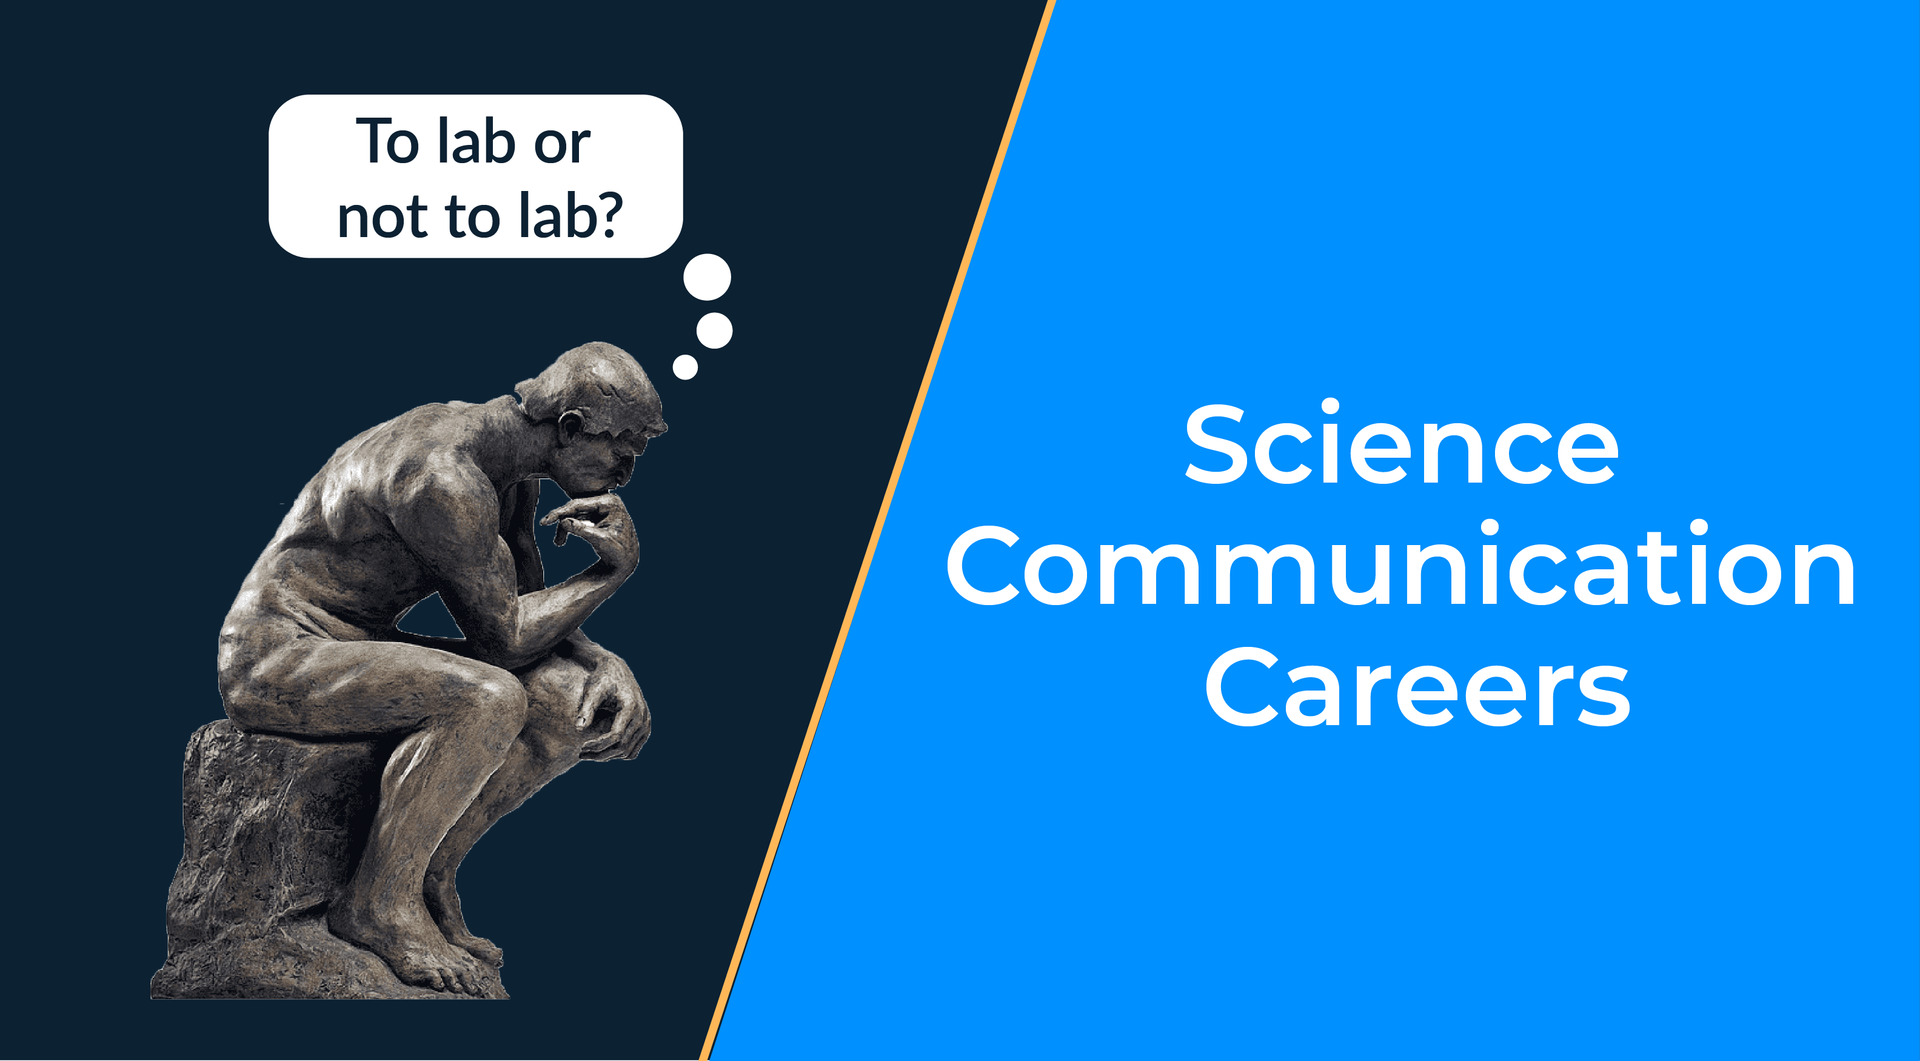 Science communication careers webinar summary